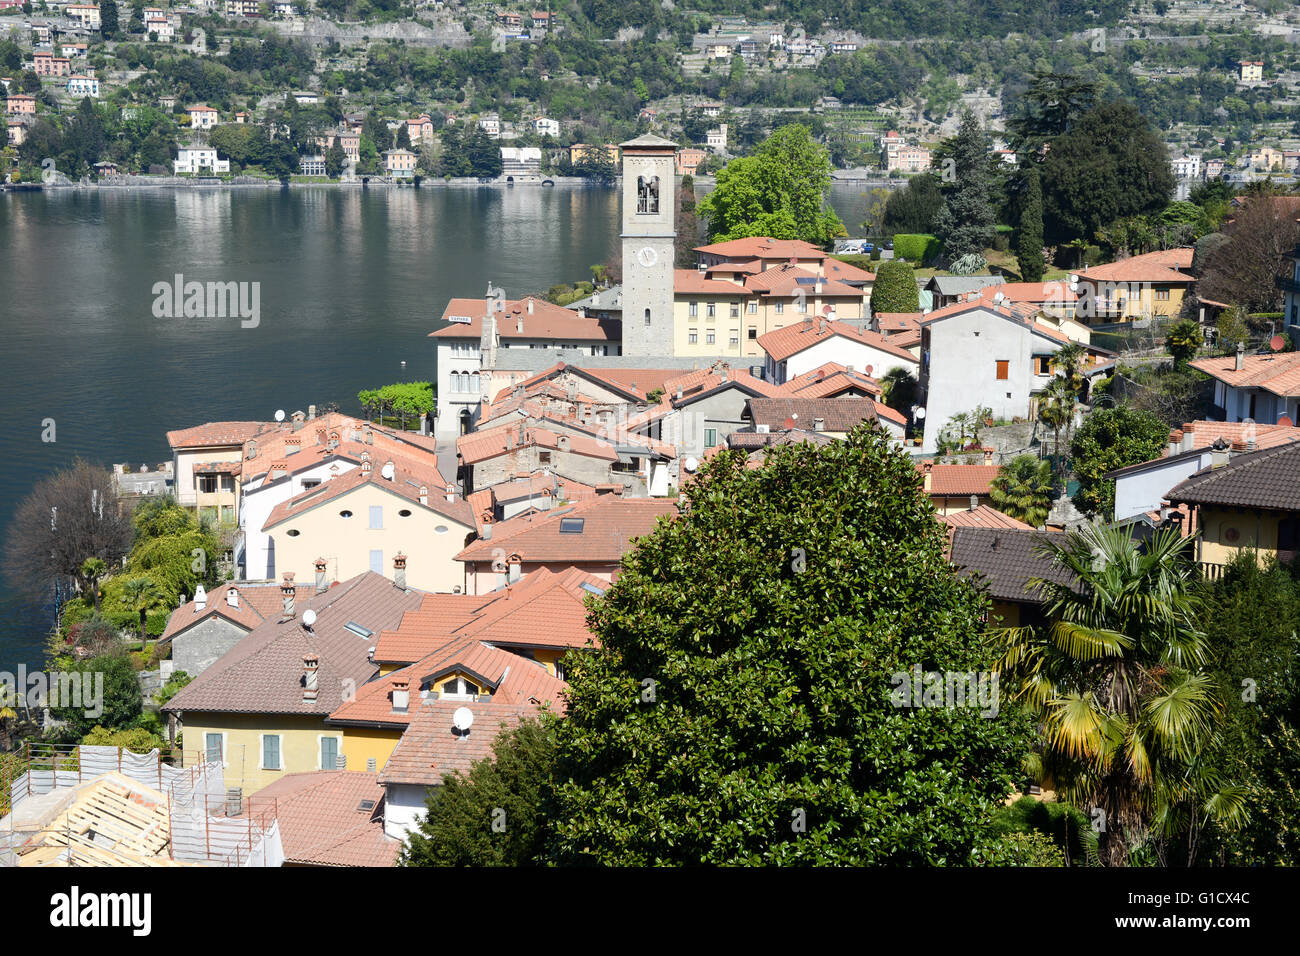 Das Dorf von Torno am Comer See, Italien Stockfoto